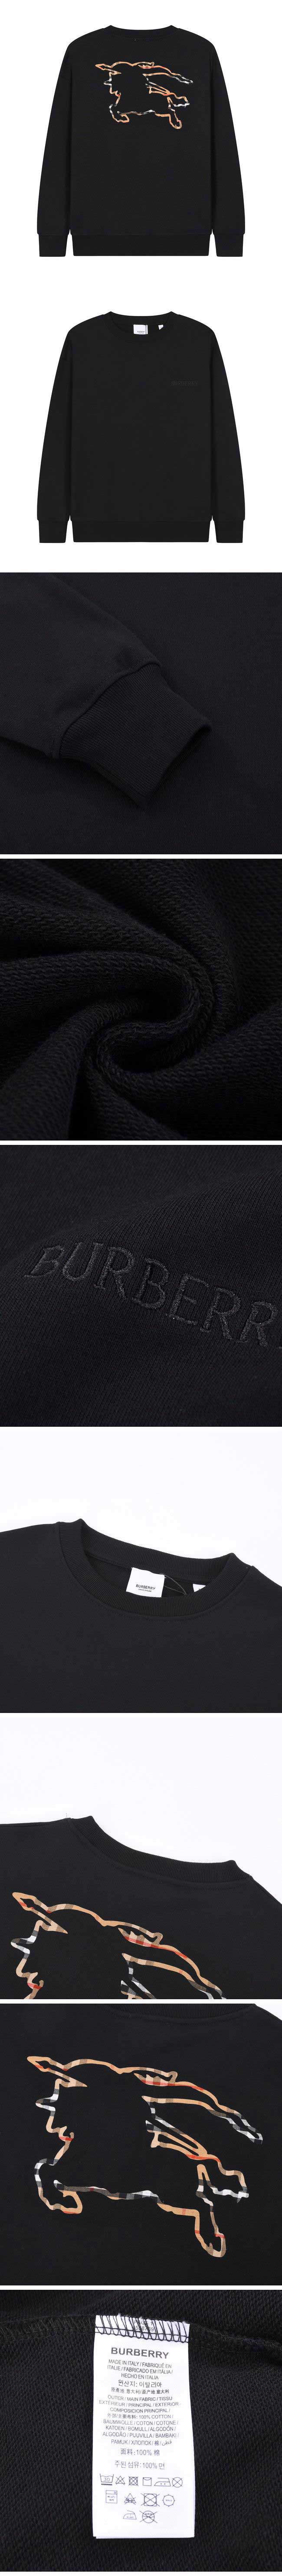 Burberry Check Line Sweat バーバリー チェック ライン スウェット ブラック